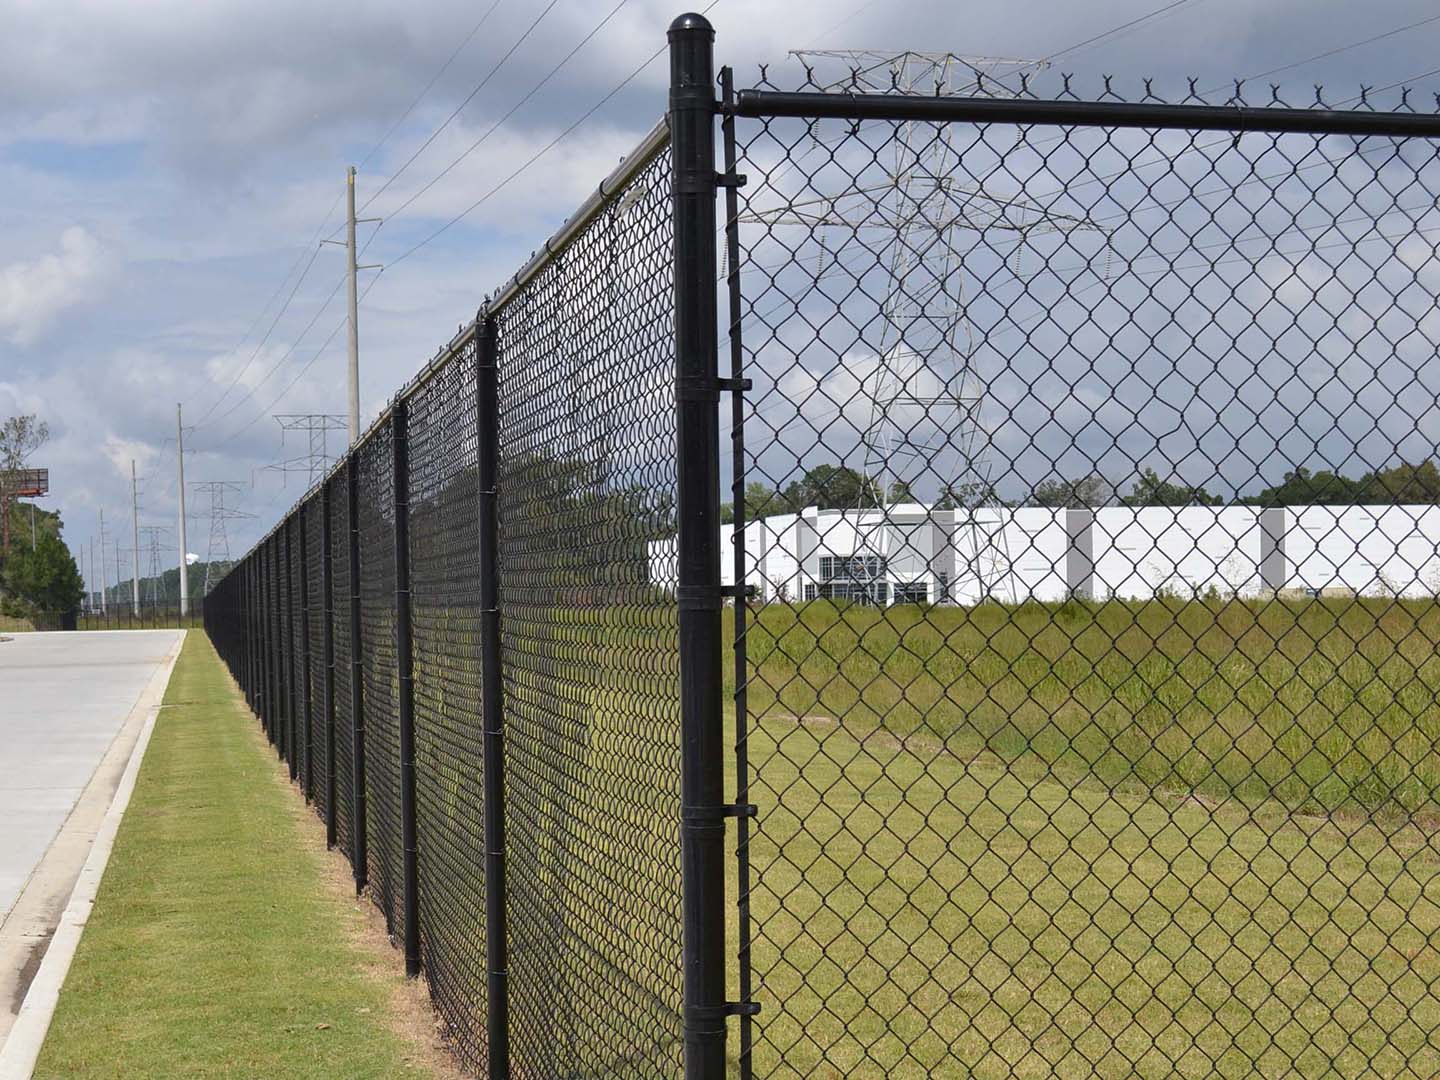 Photo of a Savannah GA chain link fence